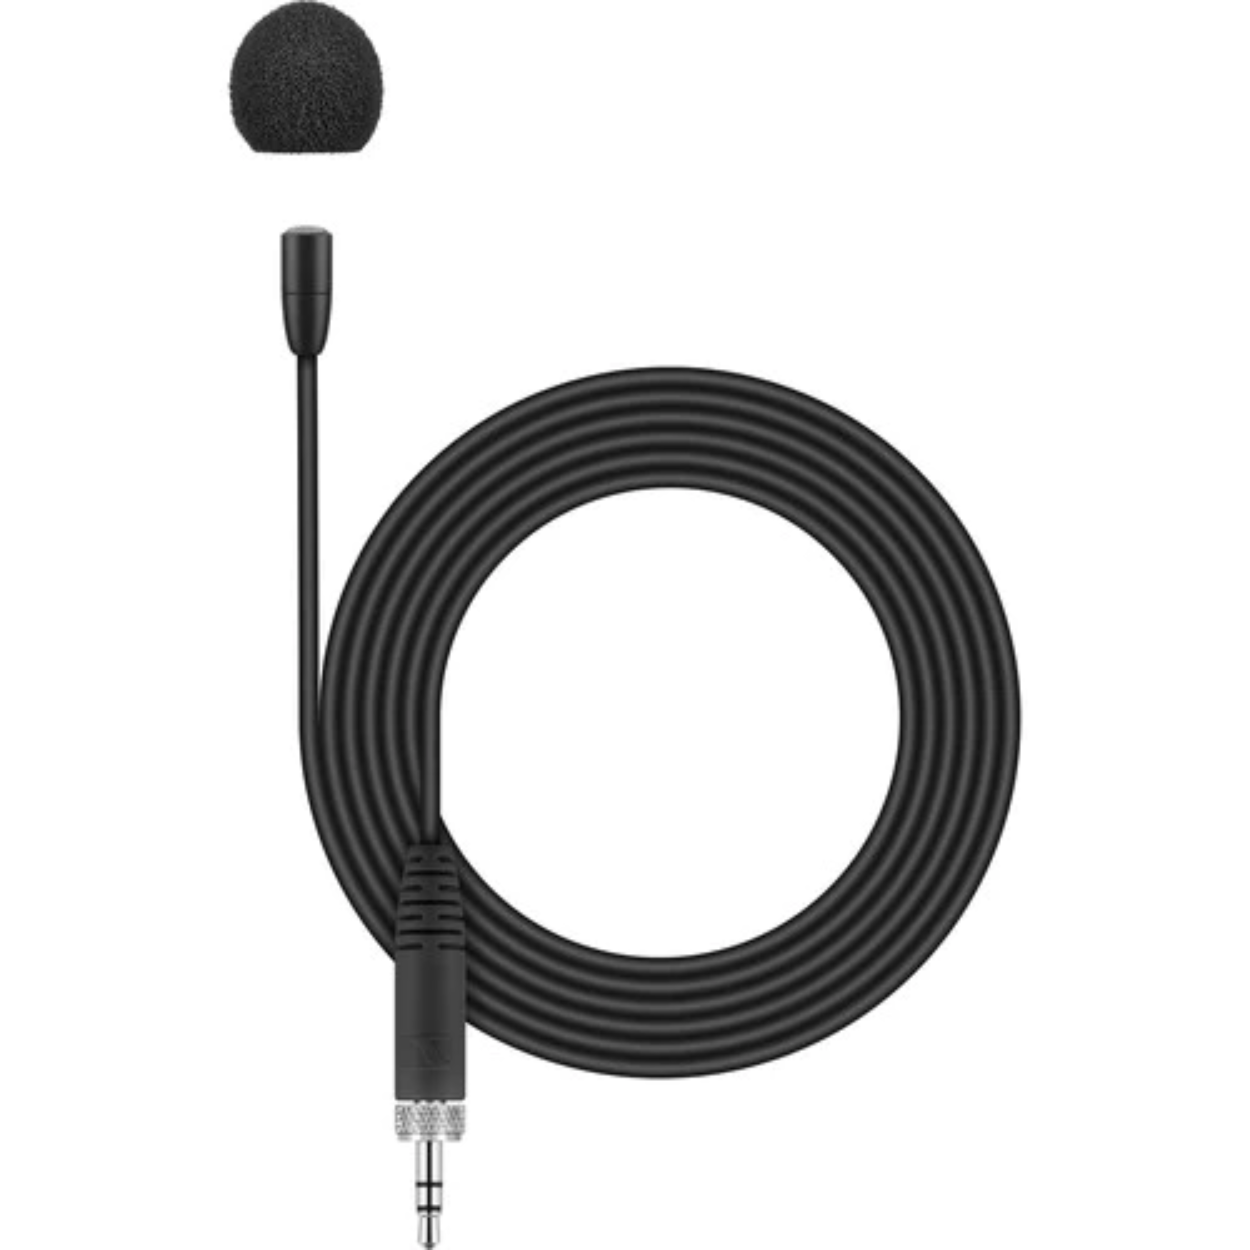 Sennheiser MKE Essential Omni Lavalier Microphone - Black